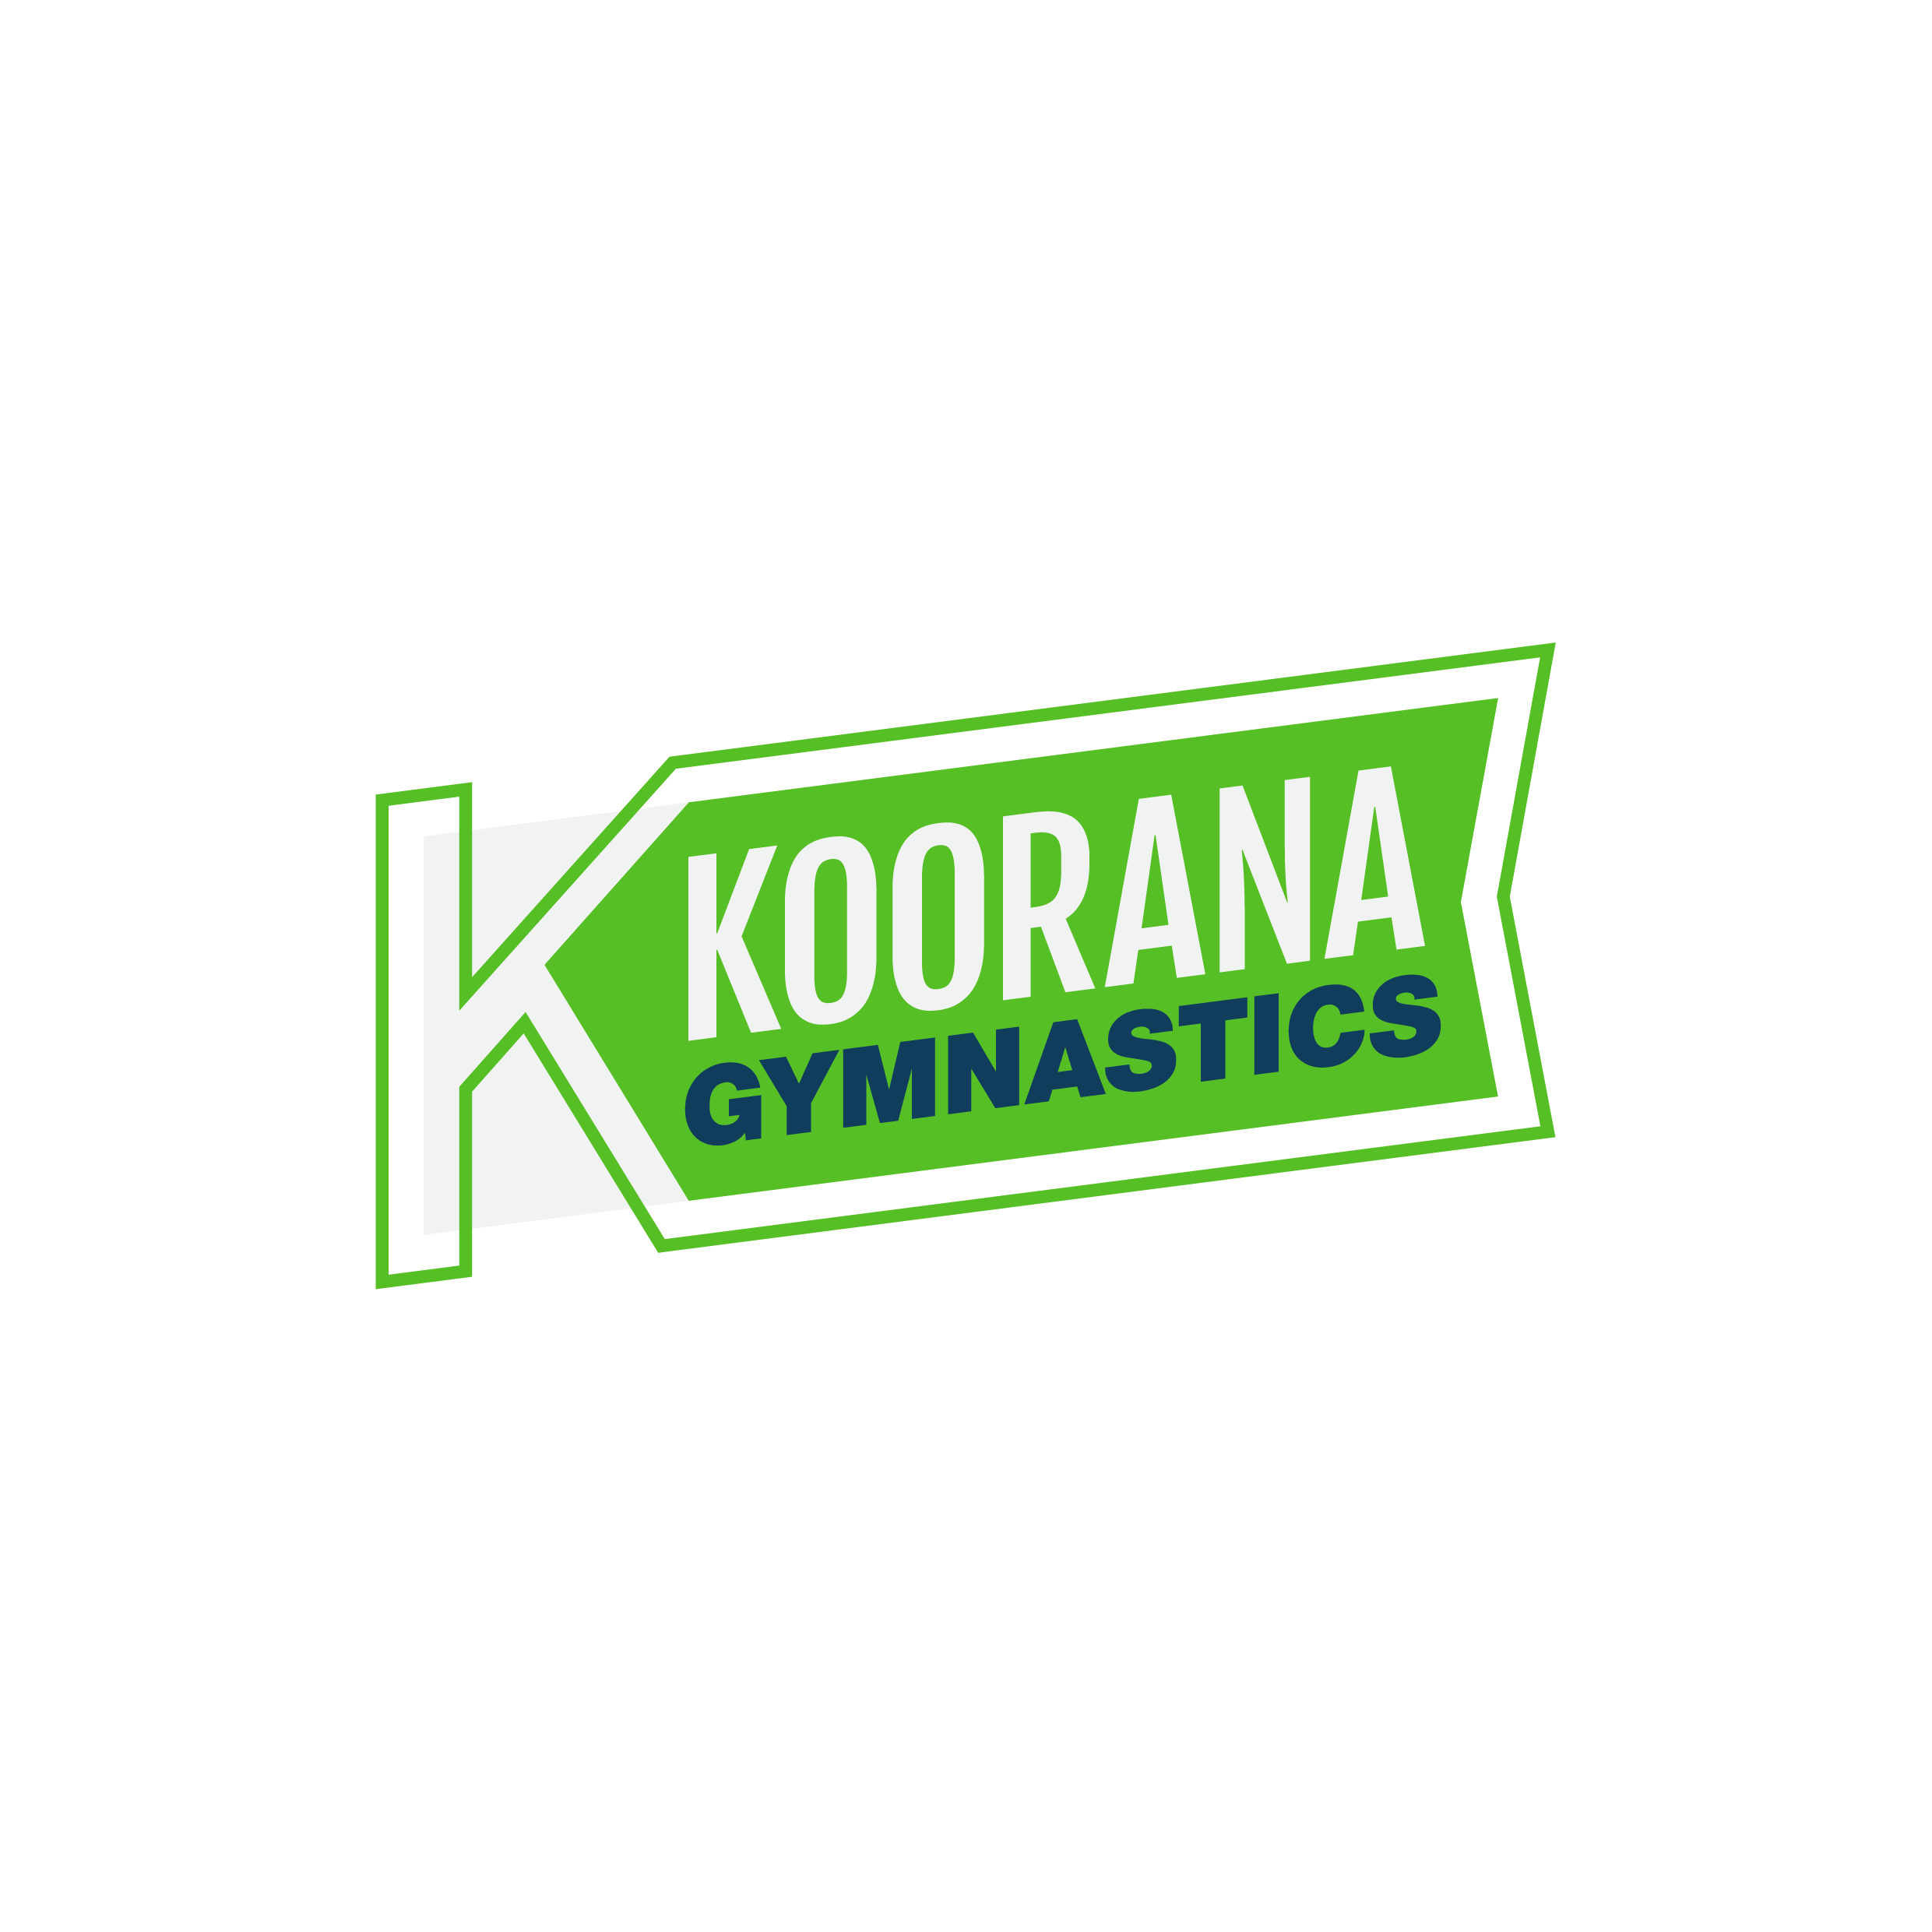 Koorana Gymnastics Club logo